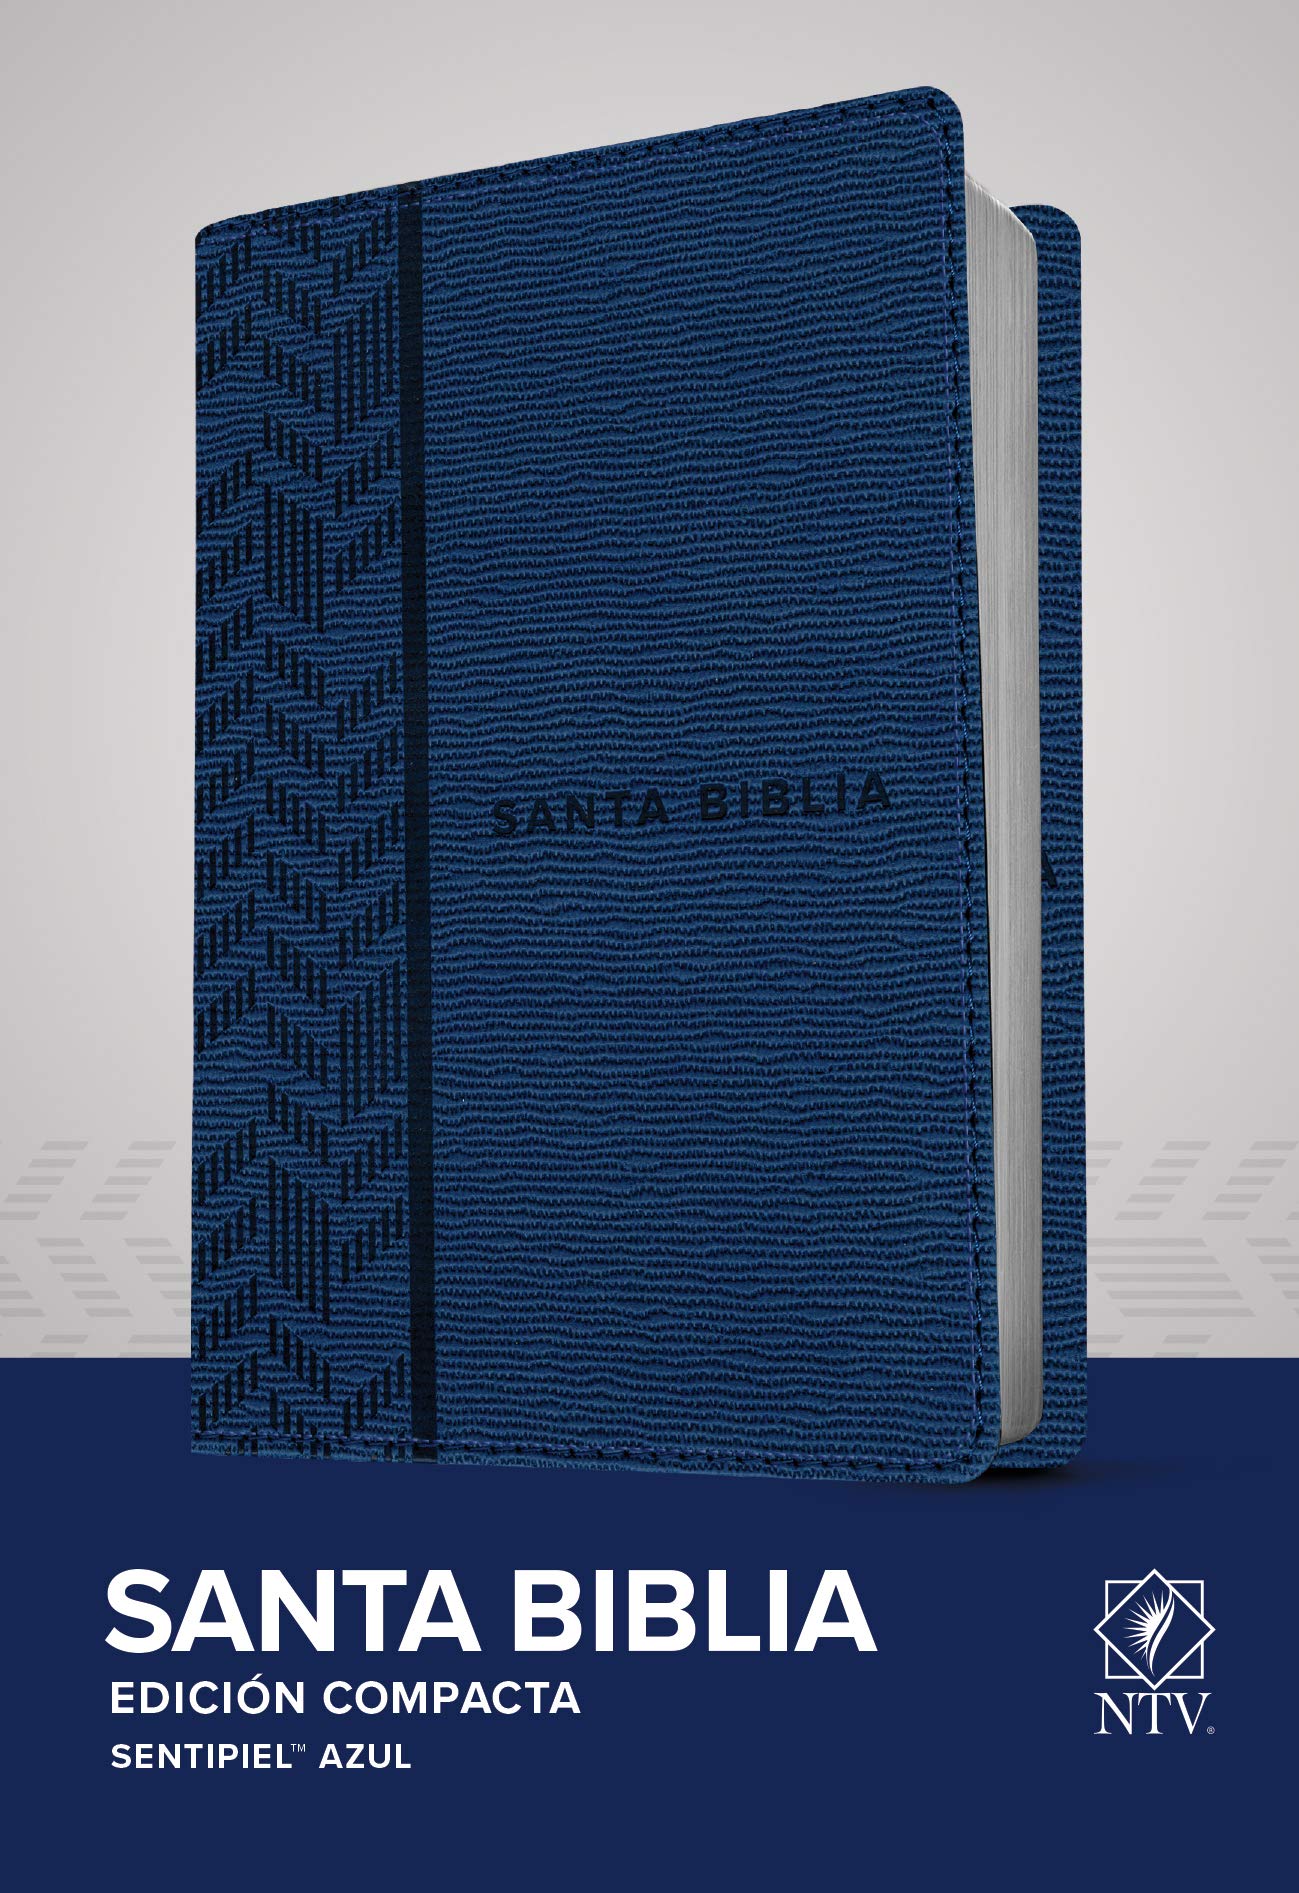 Santa Biblia NTV, Edici�n compacta ,SentiPiel, Azul de Tyndale